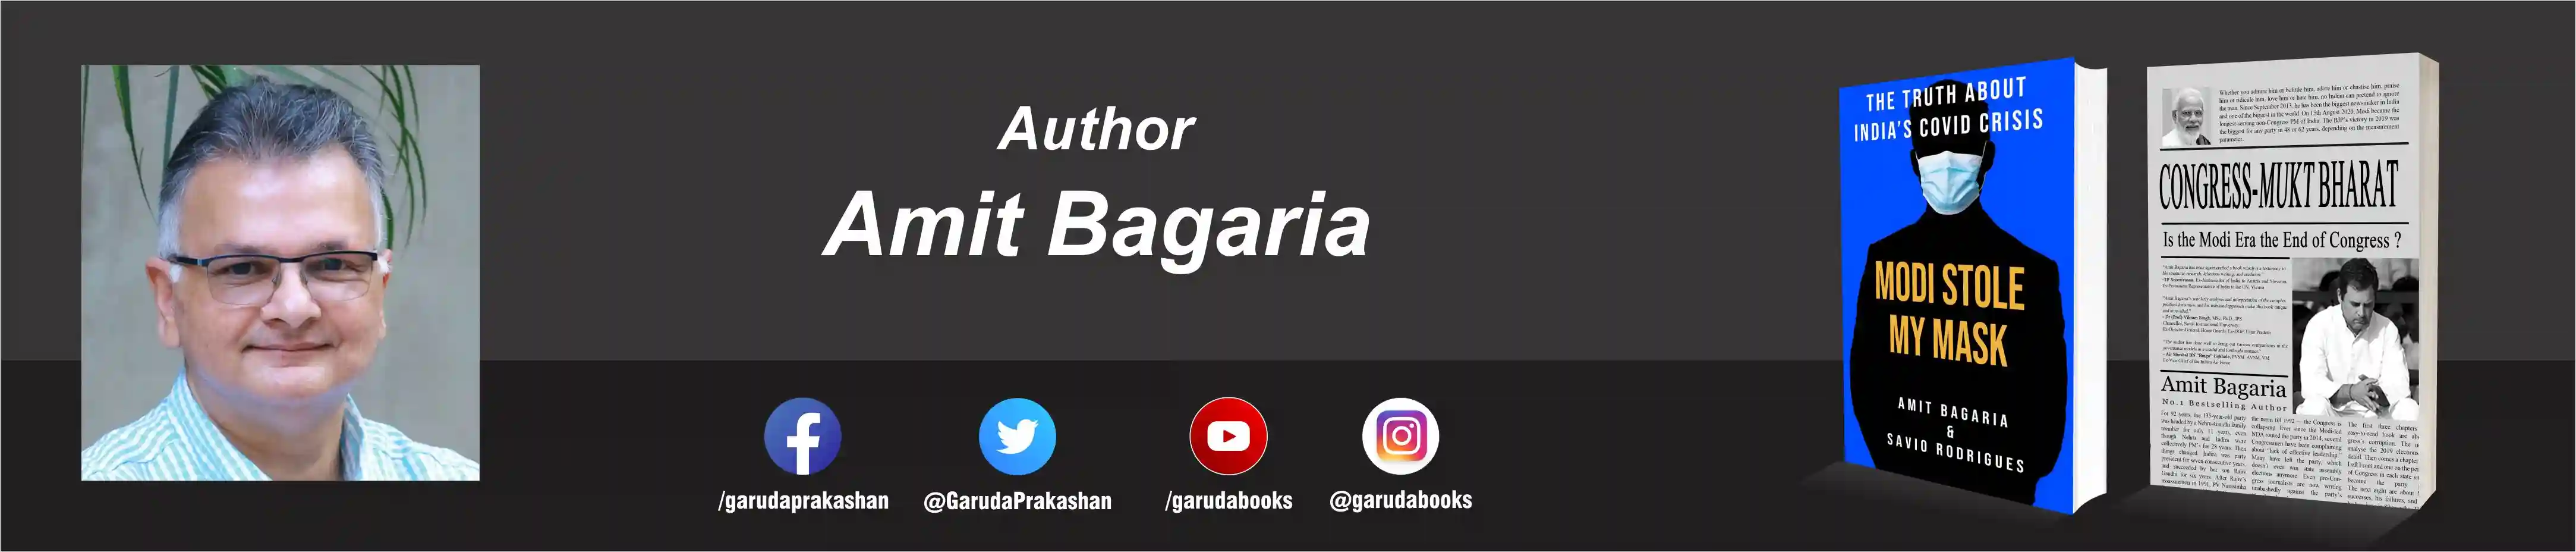 Amit Bagaria Books